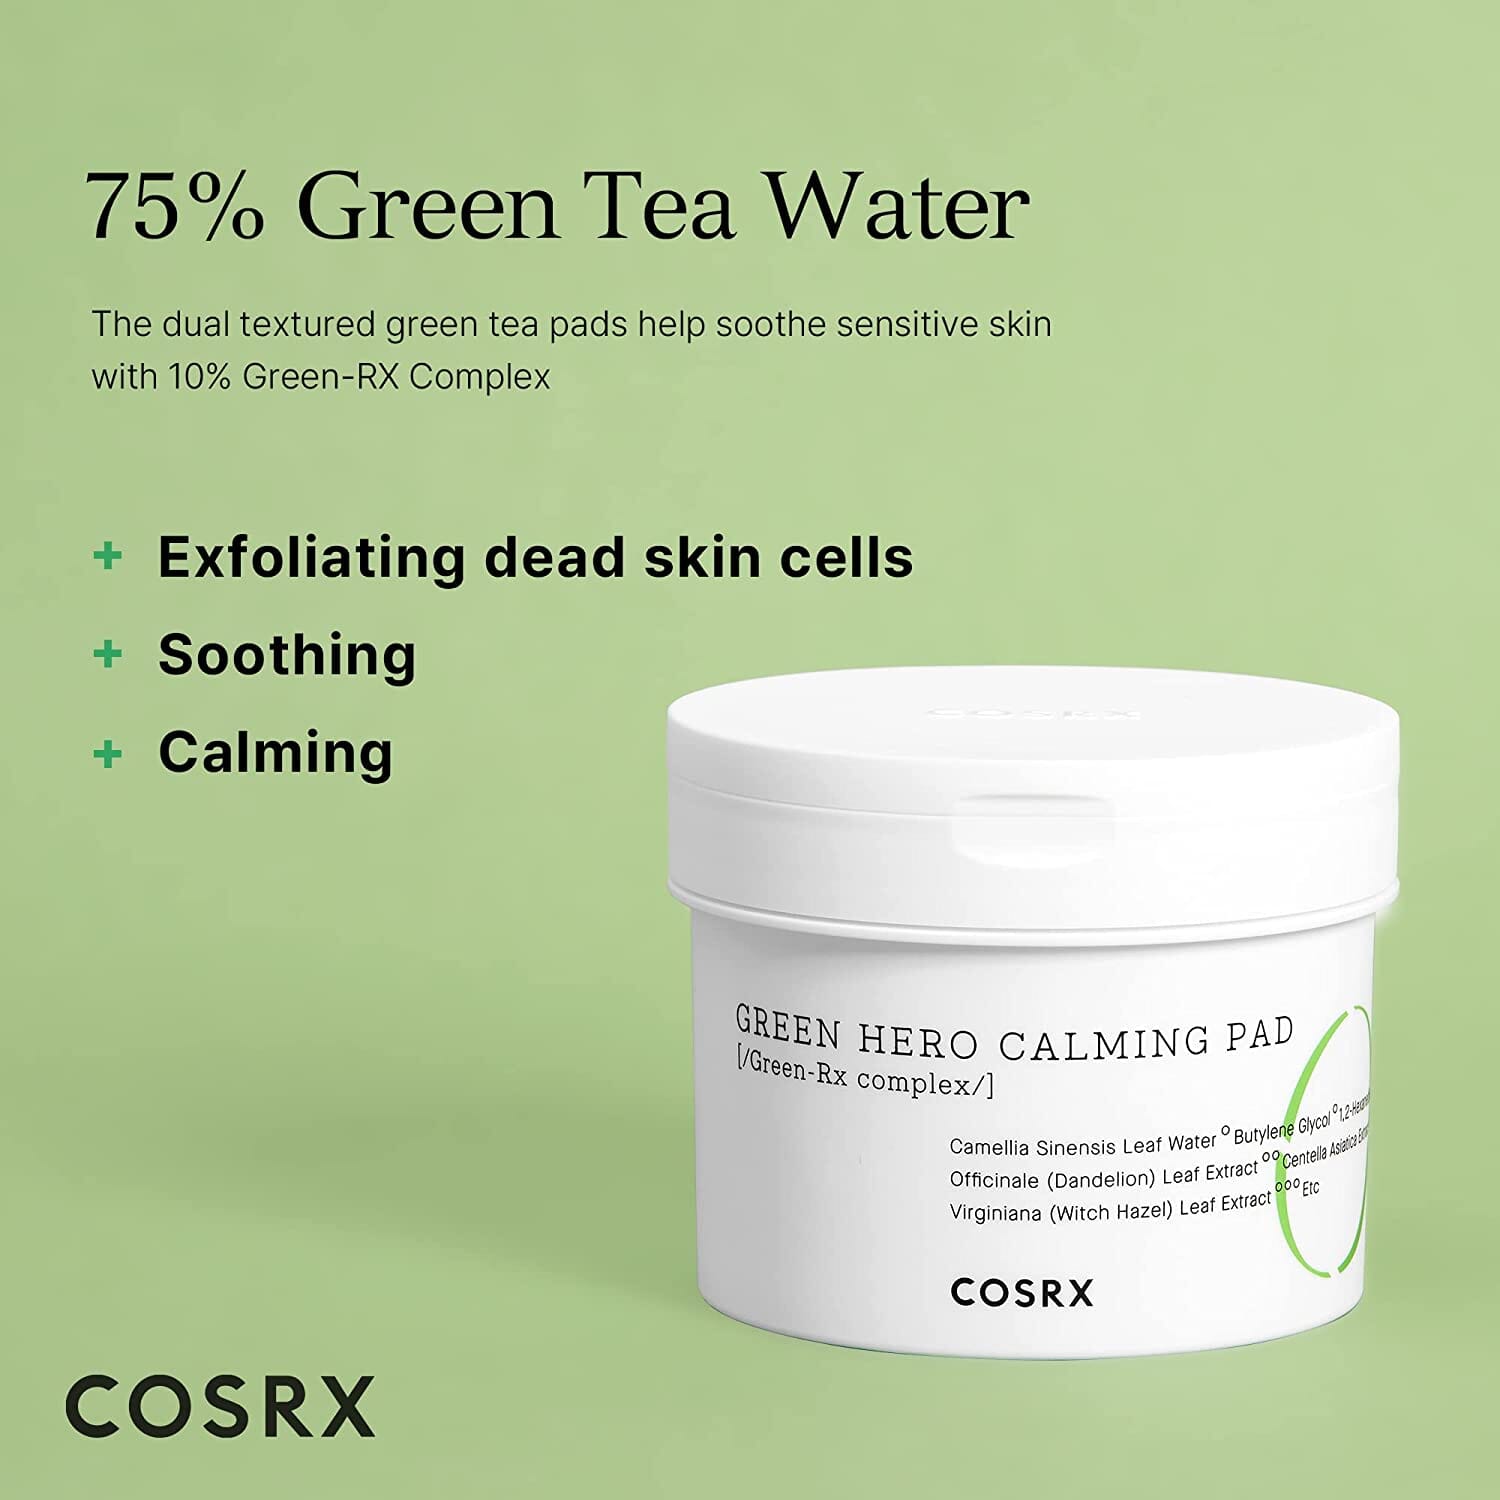 COSRX One Step Green Hero Calming Pad 70ea Skin Care COSRX ORION XO Sri Lanka